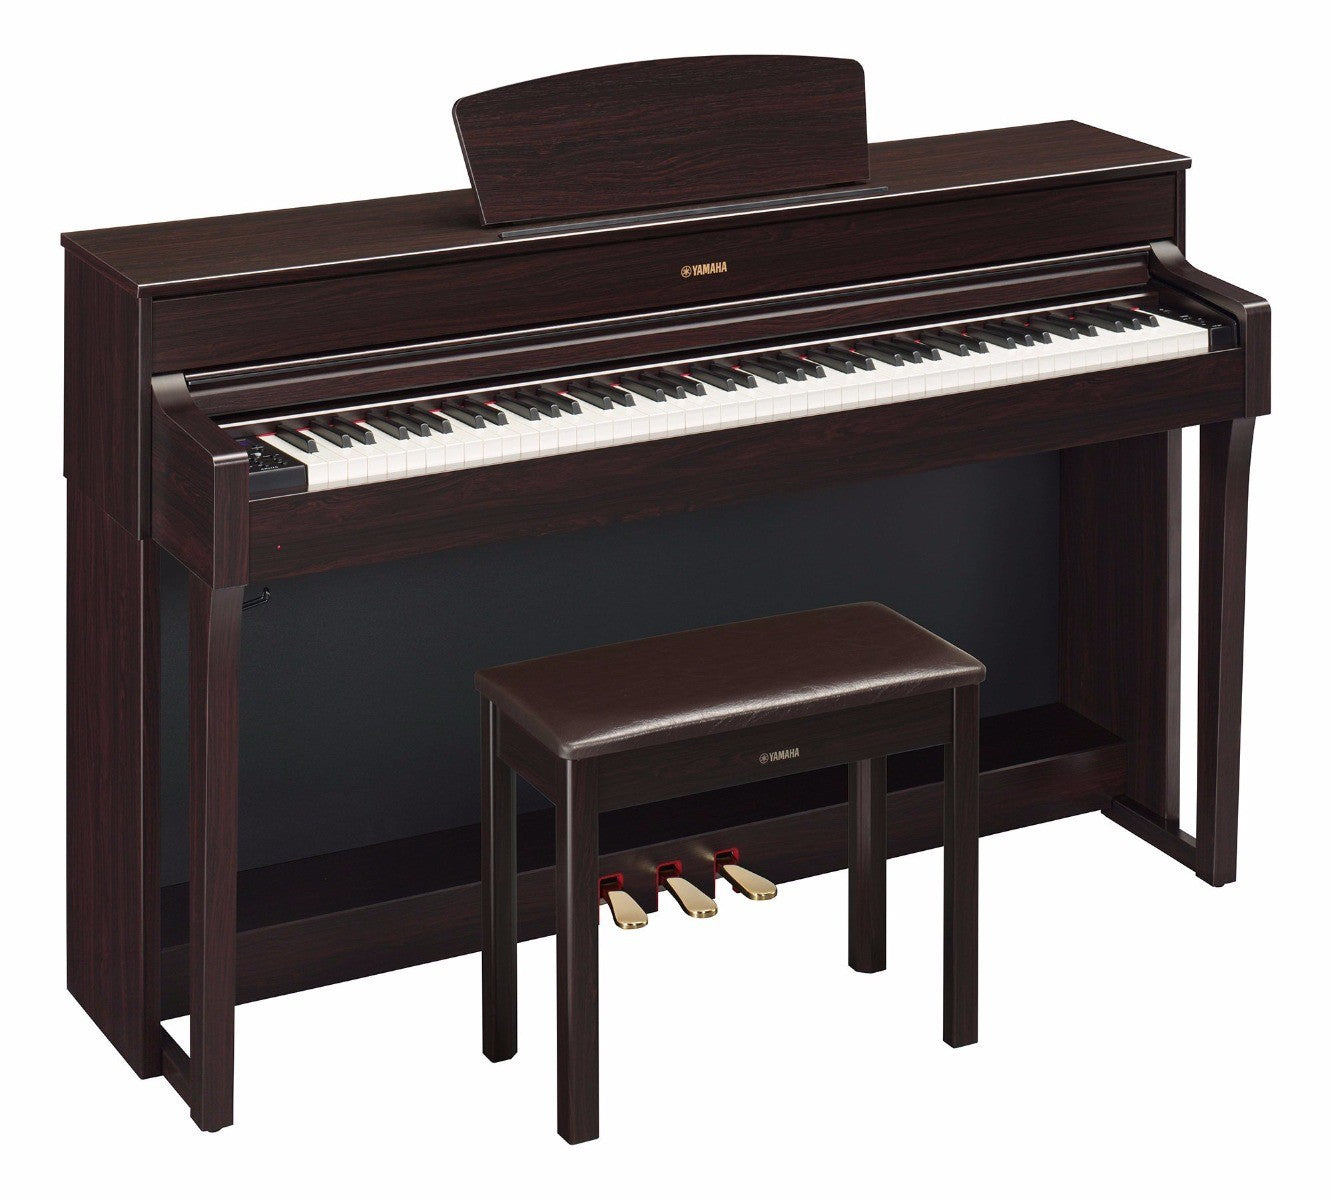 Yamaha Arius YDP-184 Digital Piano - Rosewood COMPLETE HOME BUNDLE